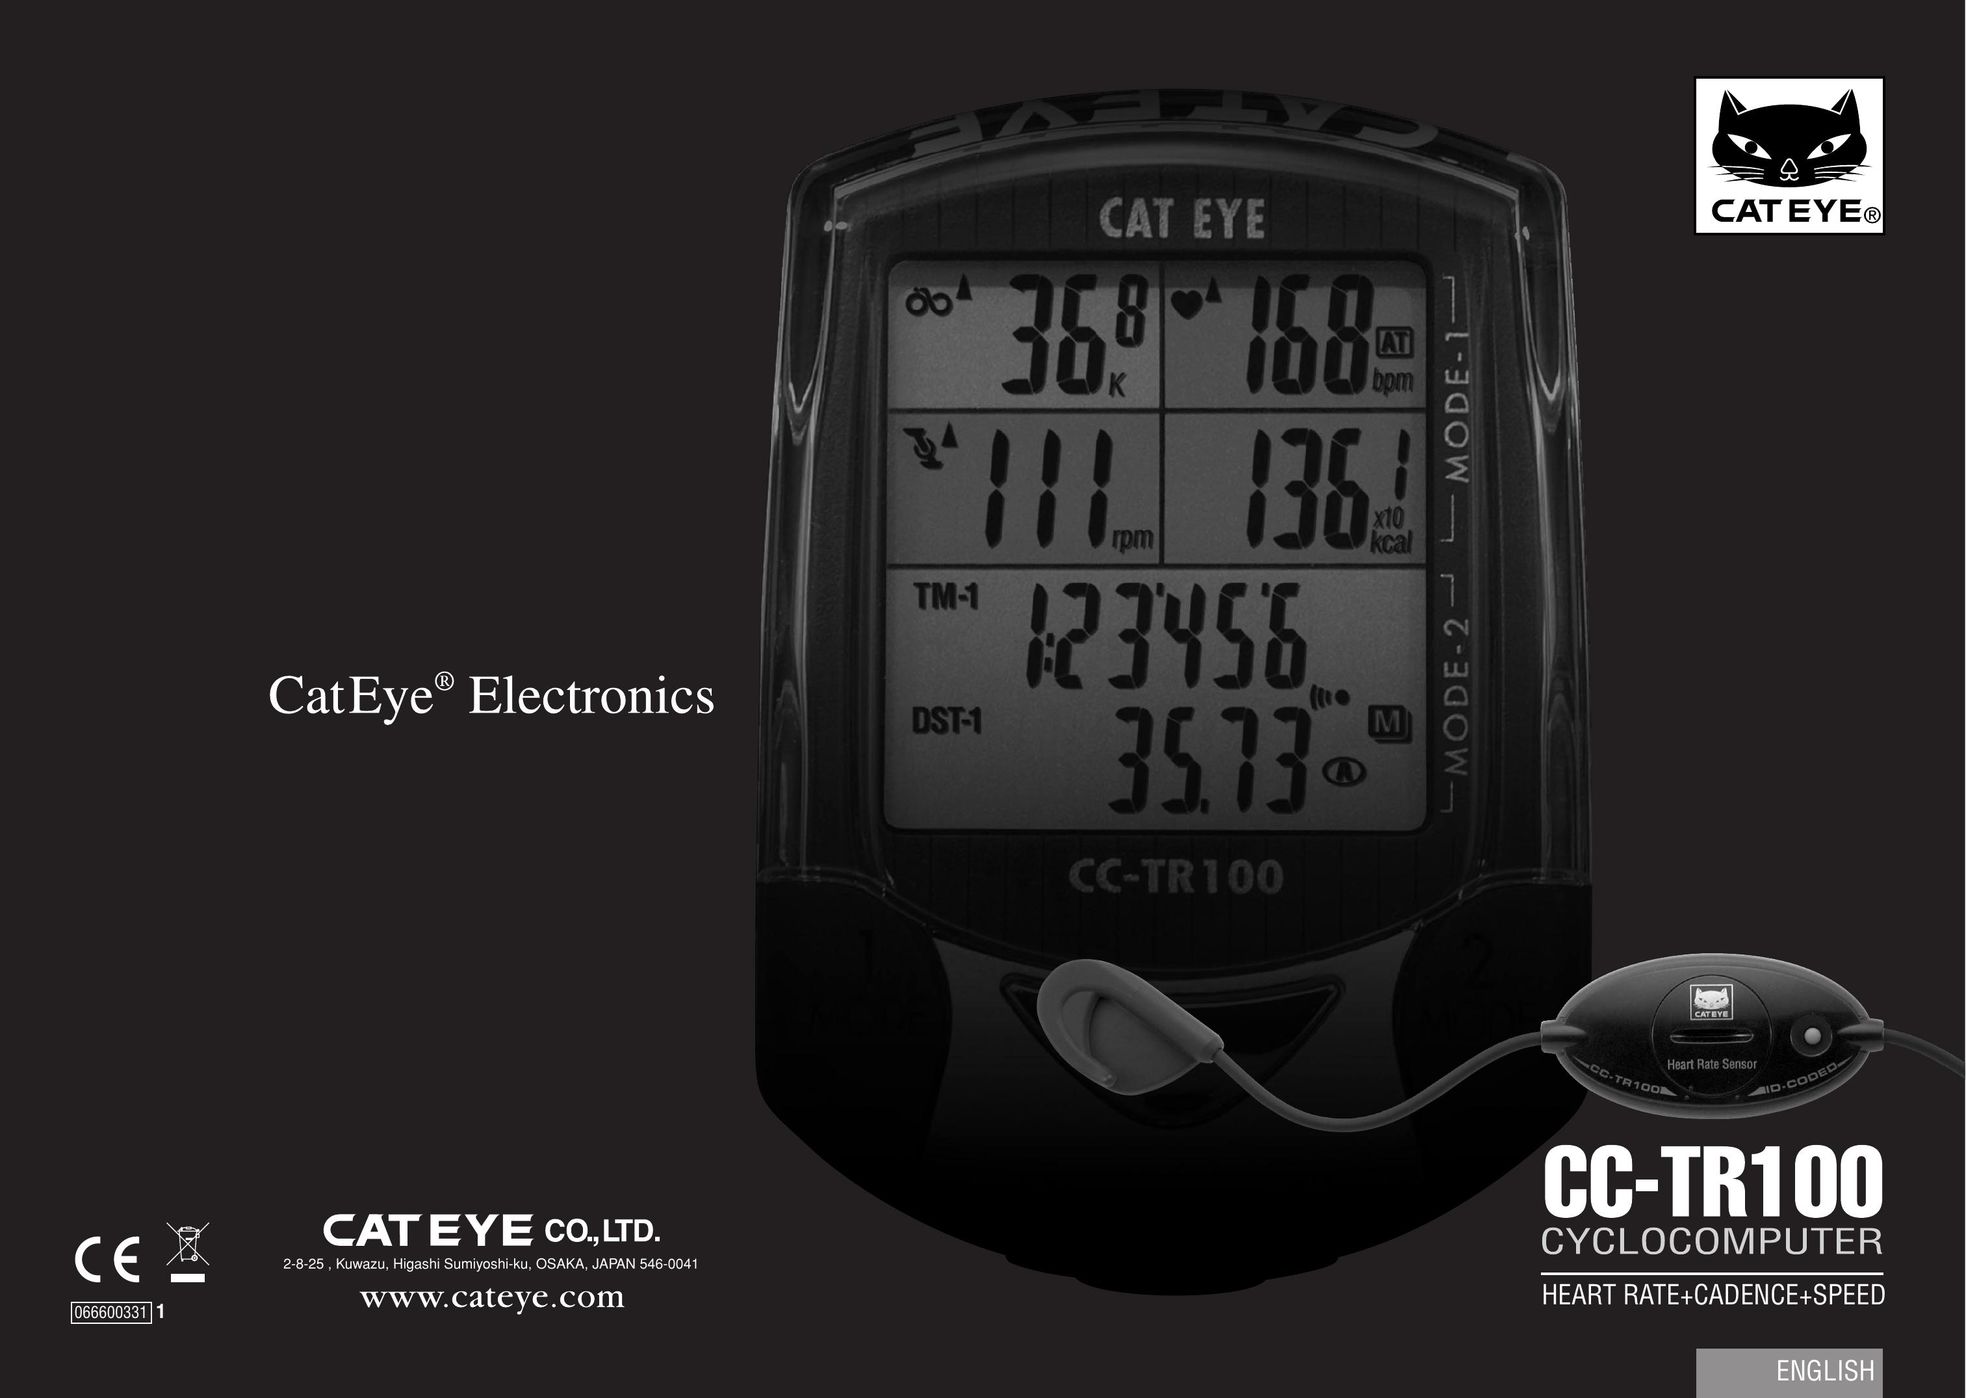 Cateye CC-TR100 Cyclometer User Manual